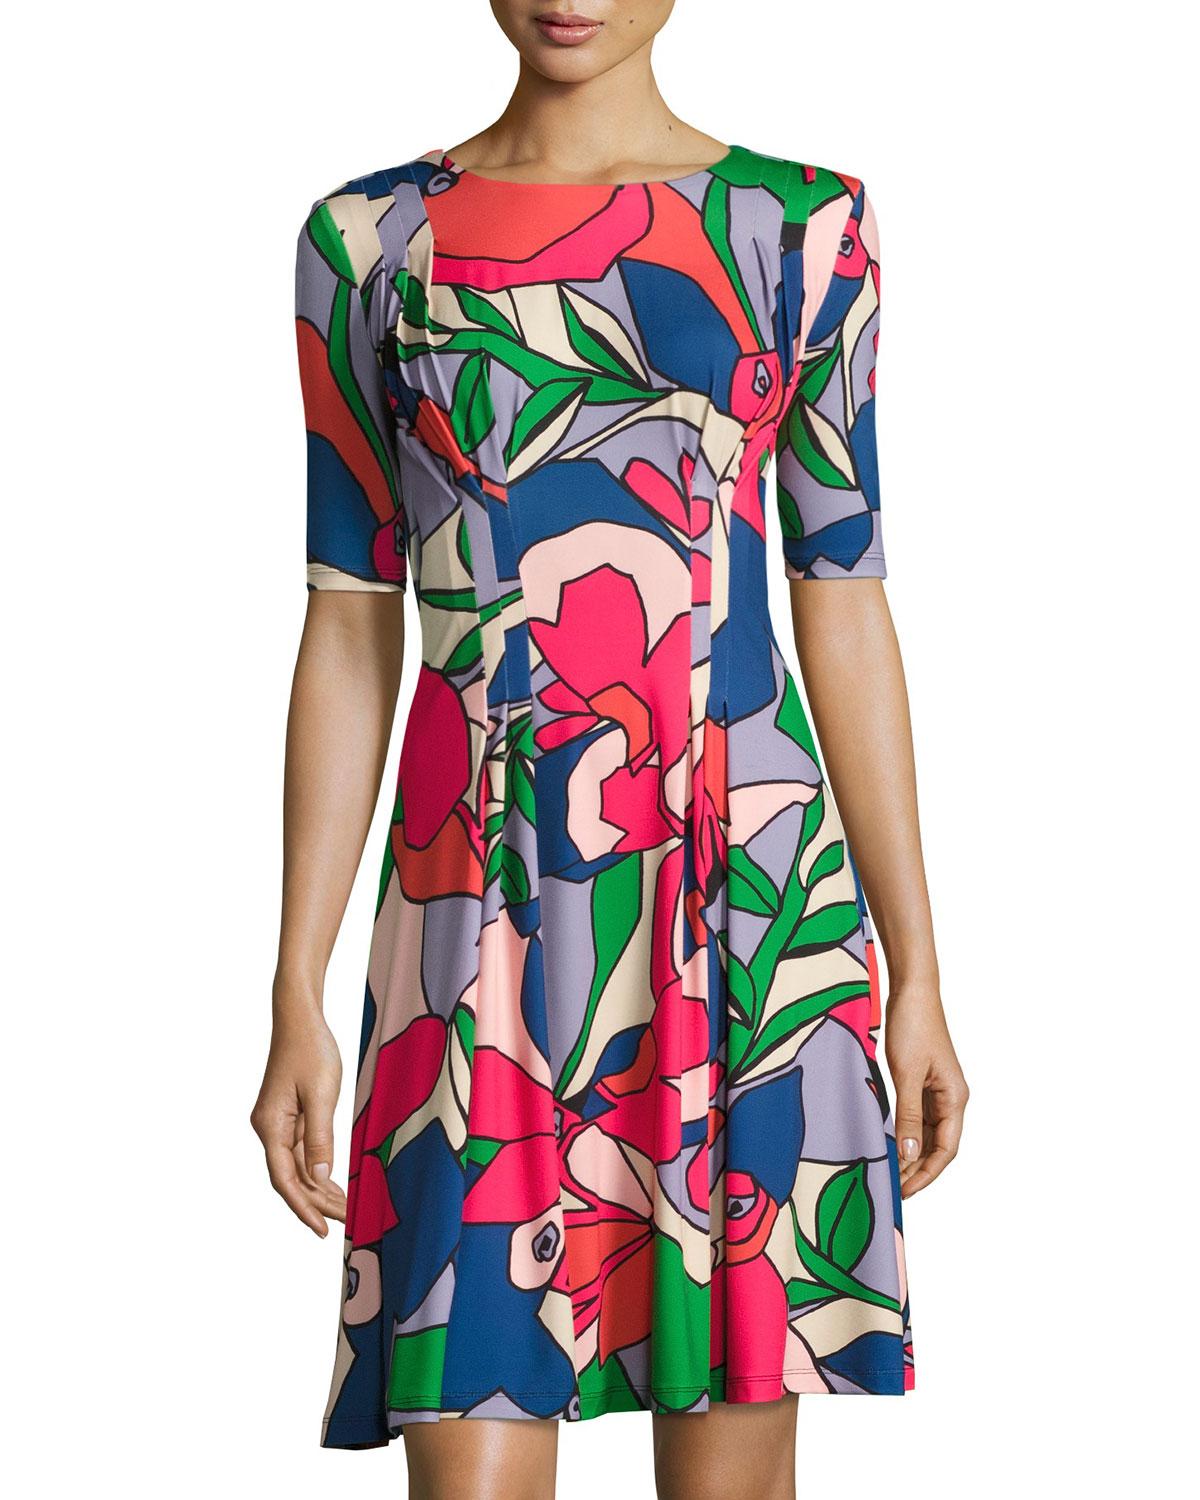 Lyst - Catherine Malandrino Half-sleeve Floral-print Dress